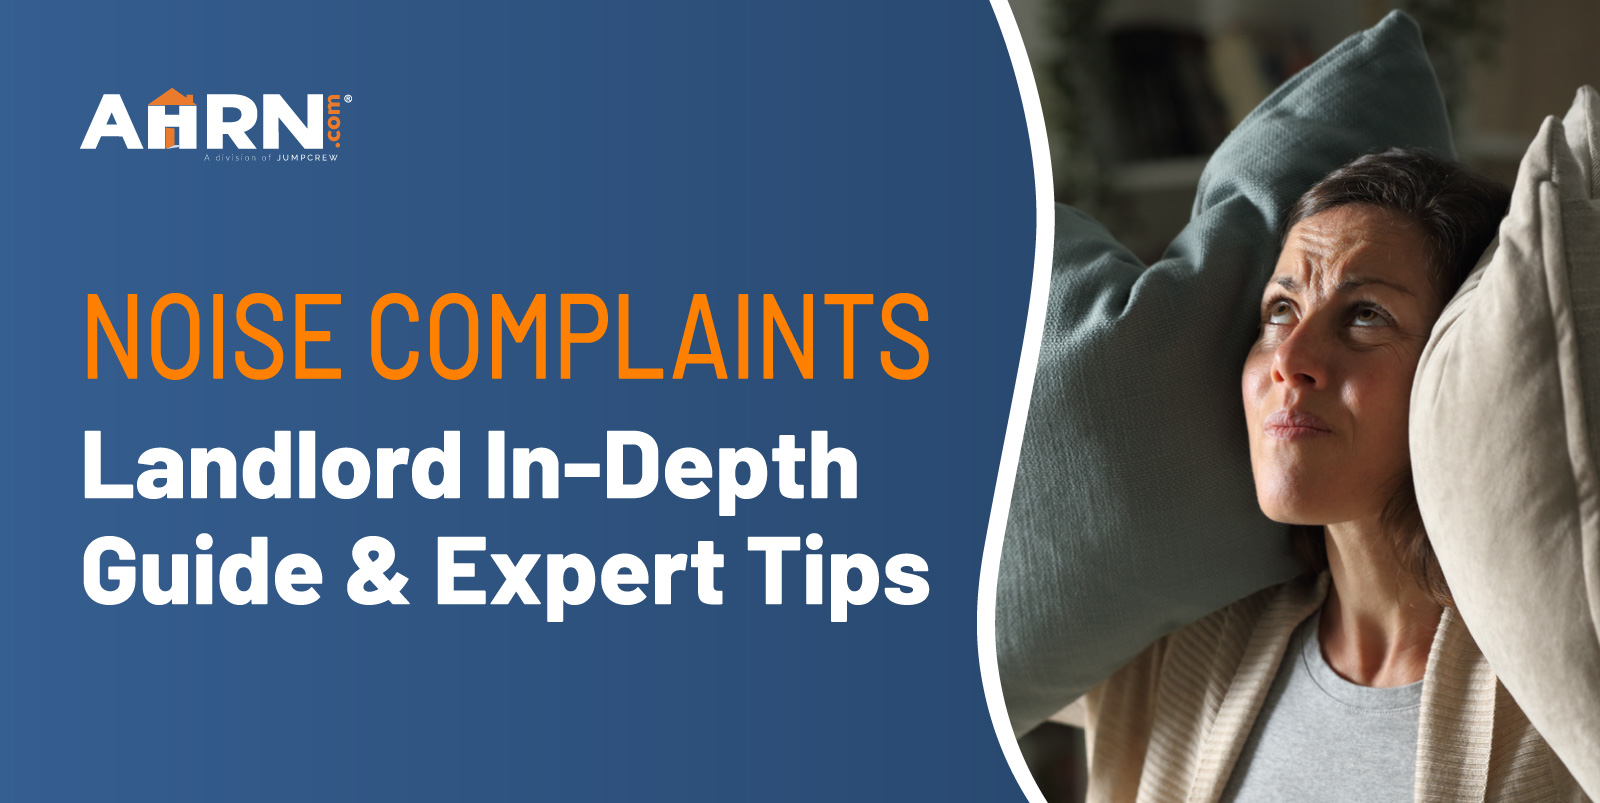 Noise Complaints: Landlord In-Depth Guide & Expert Tips